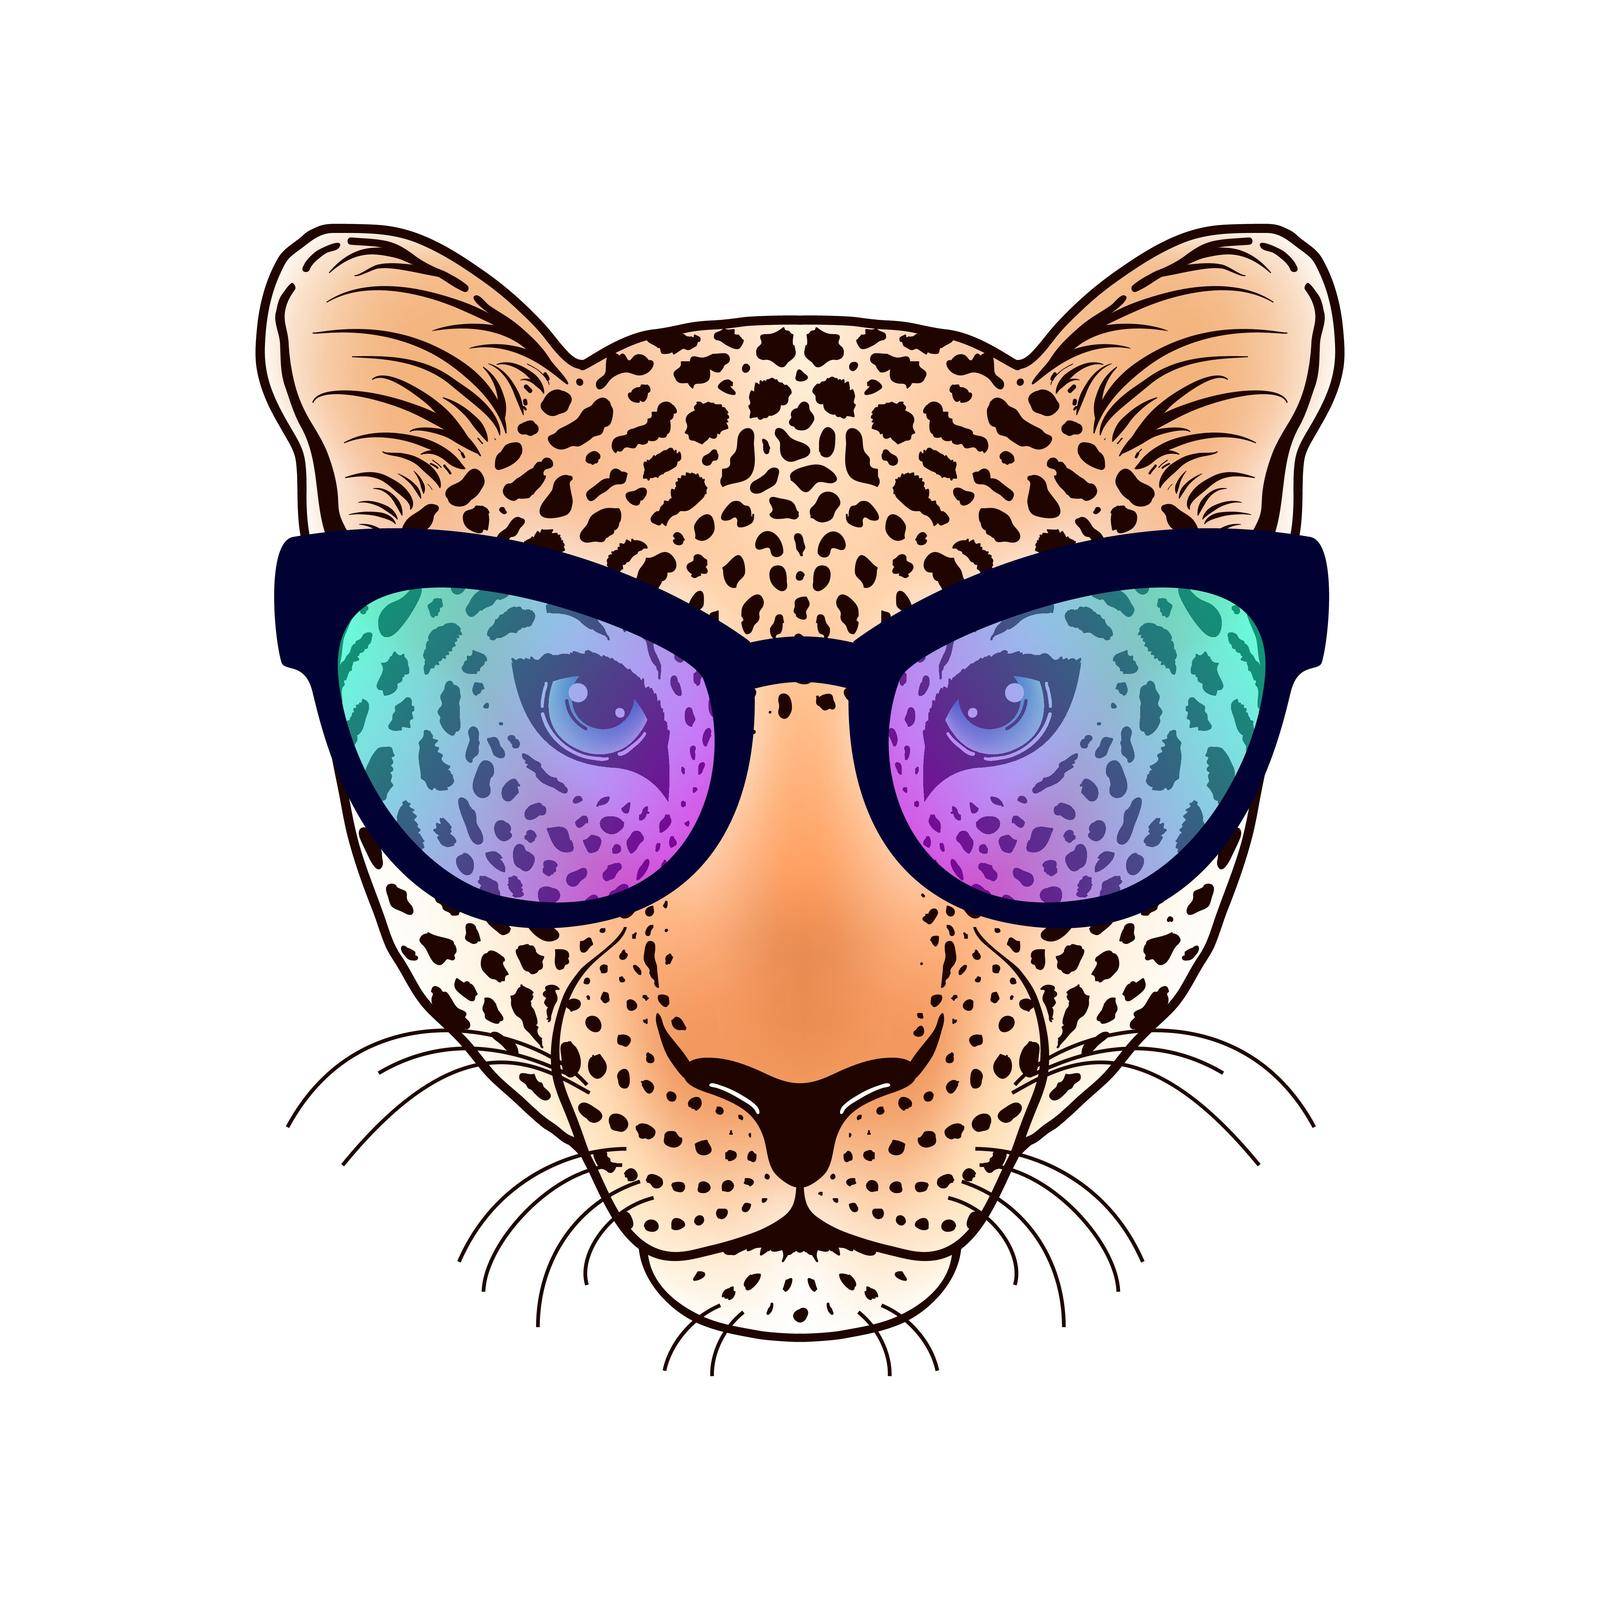 Leopard muzzle with sunglasses by kiyanochka